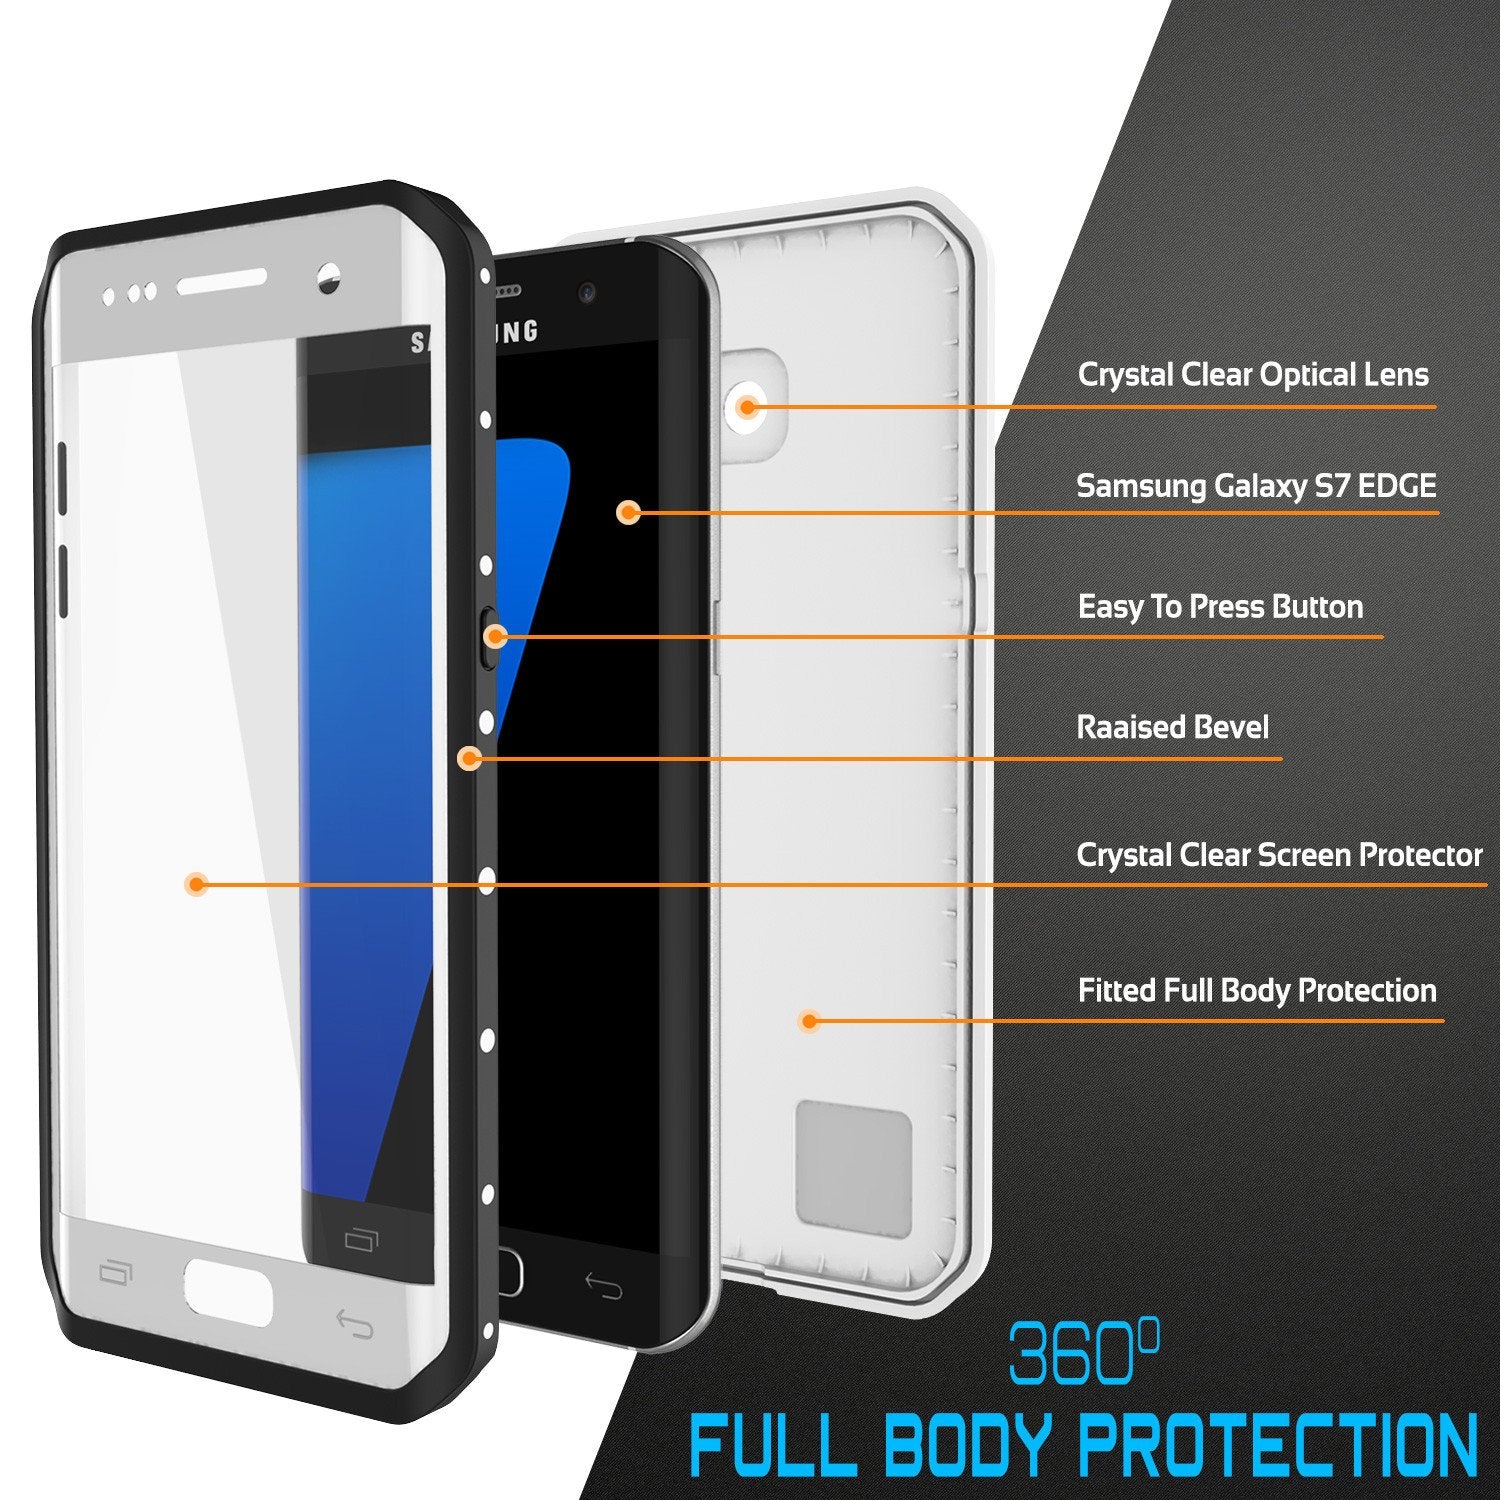 Galaxy S7 EDGE Waterproof Case, Punkcase StudStar White Thin 6.6ft Underwater IP68 Shock/Snow Proof